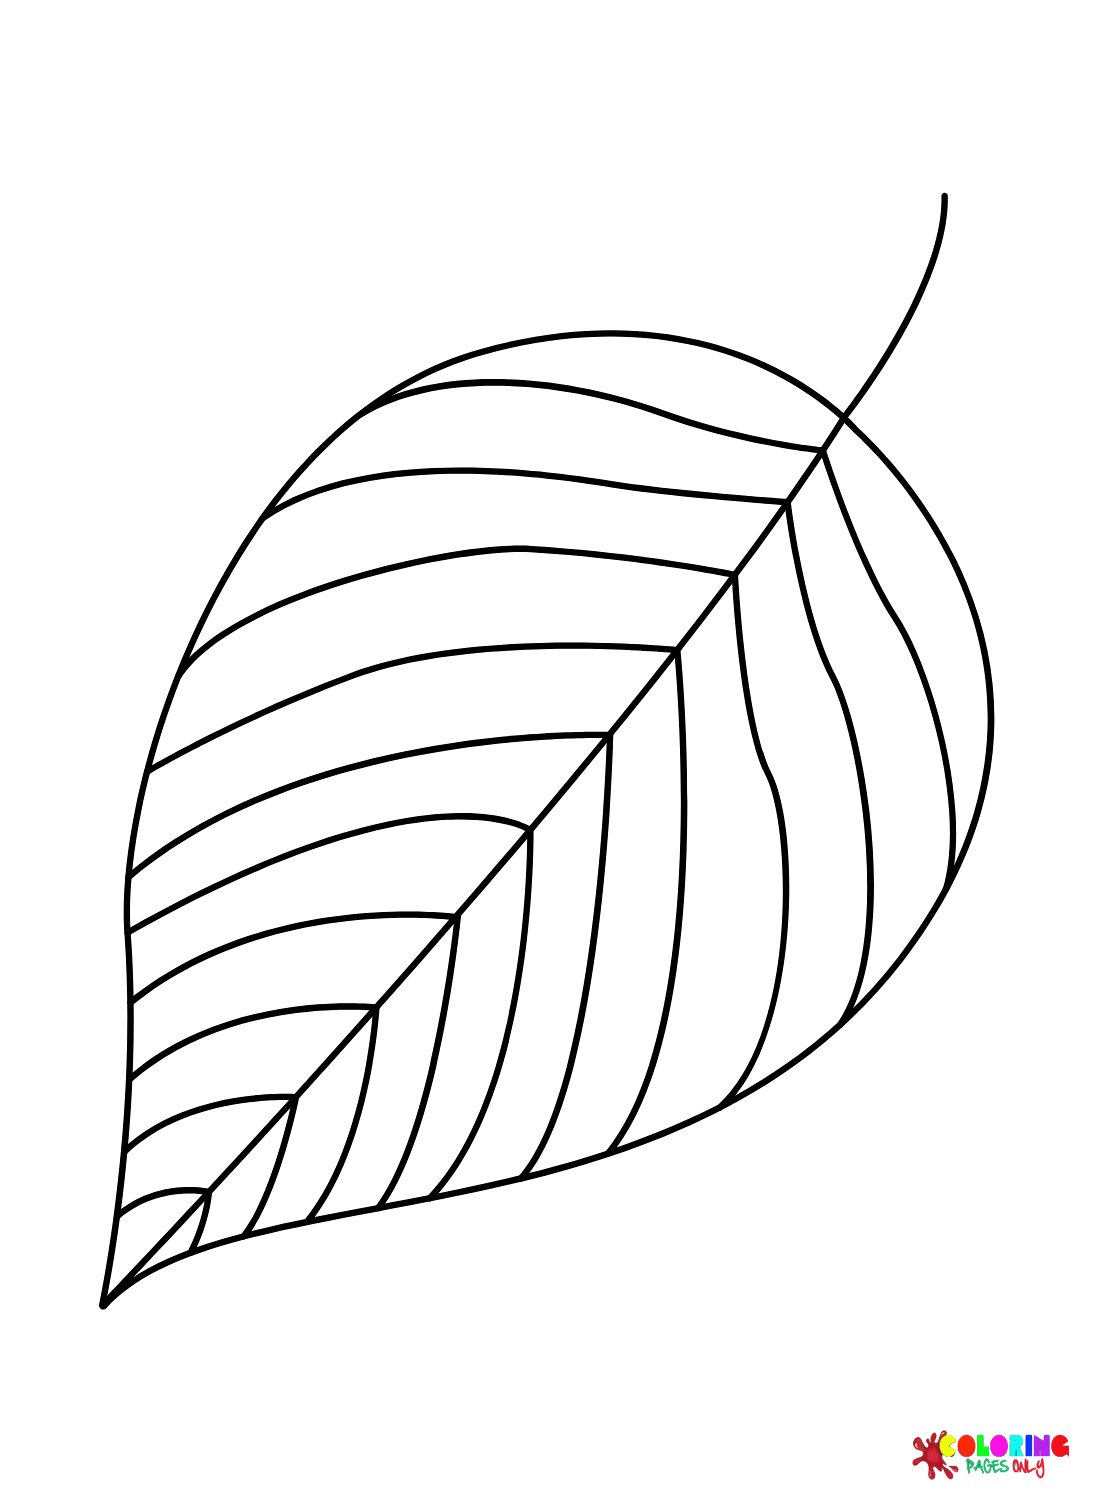 European Ash Leaf from Tree